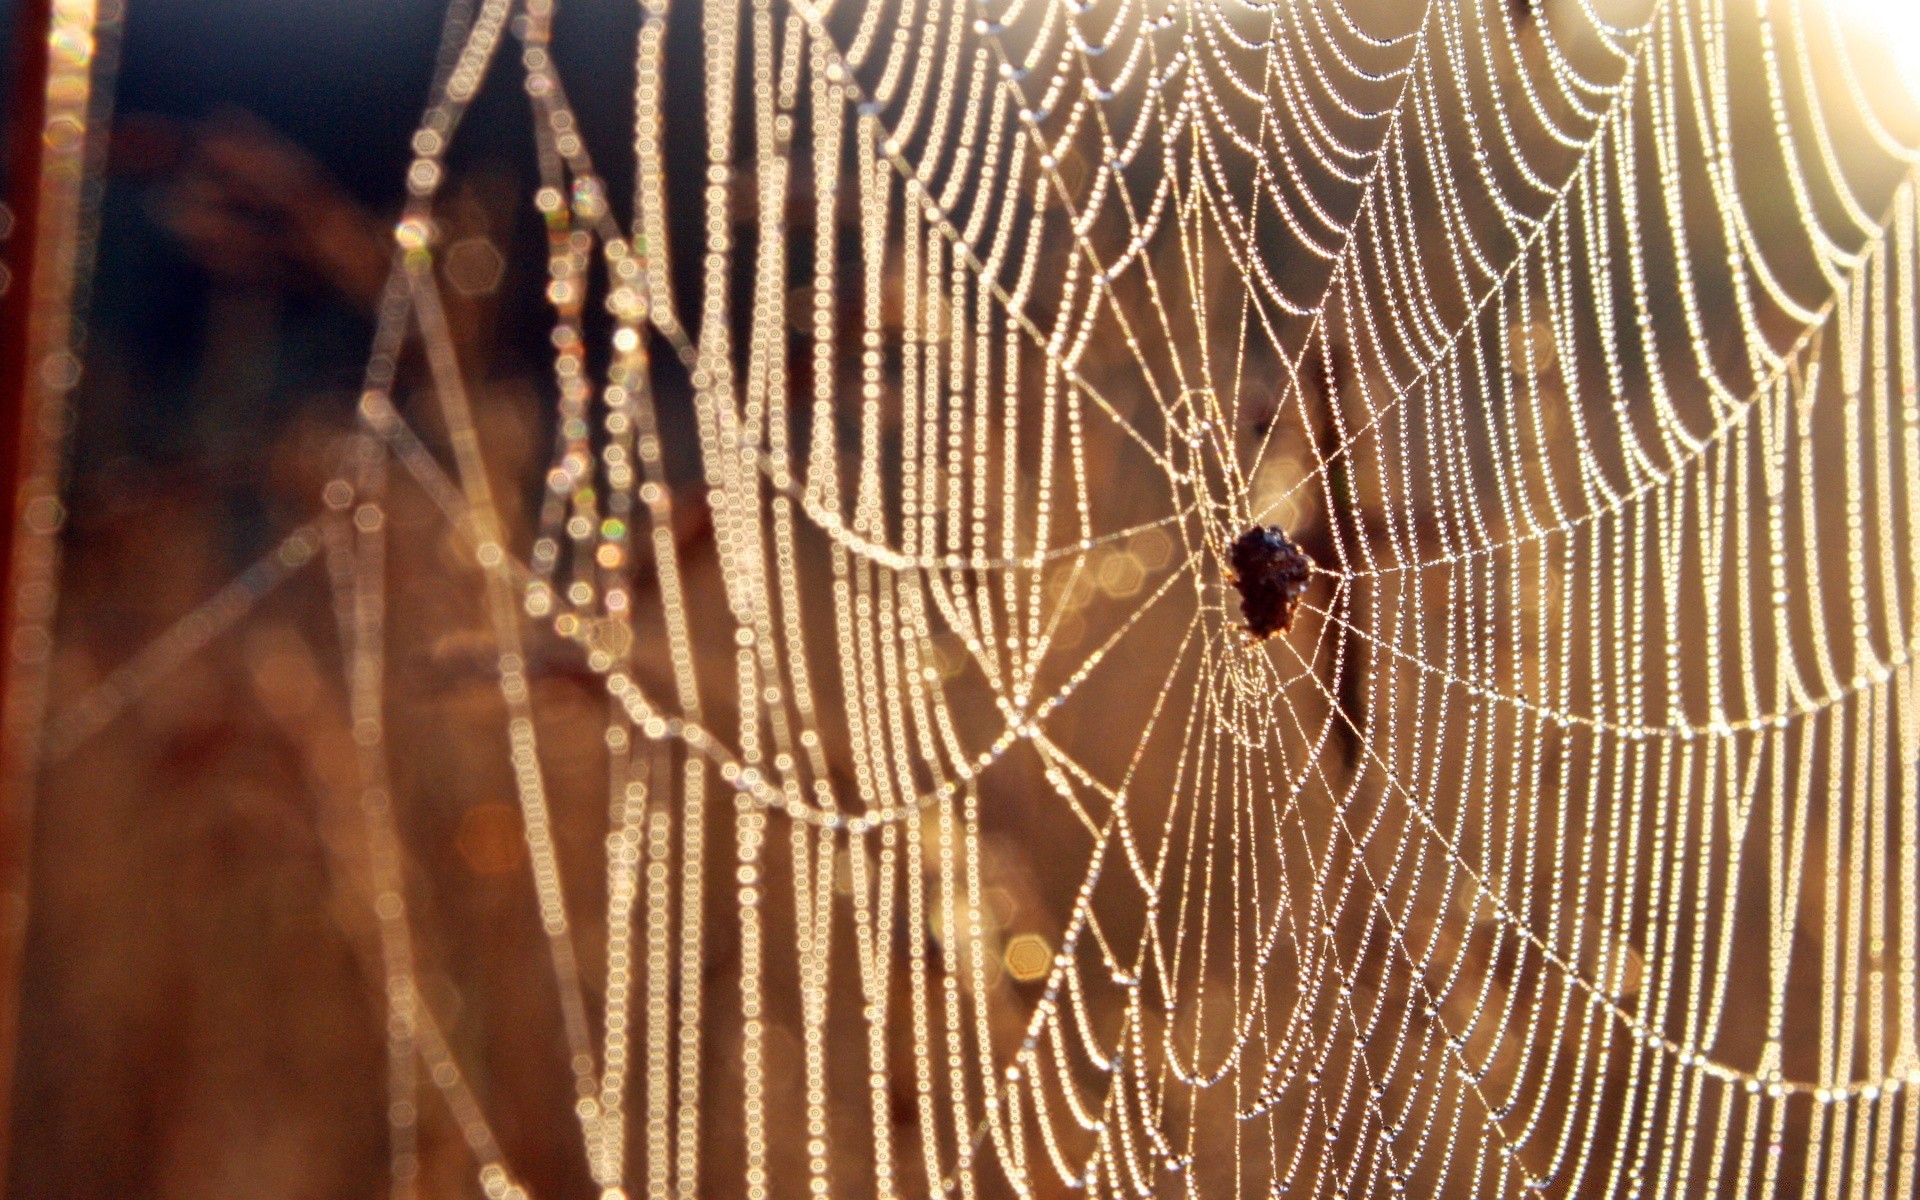 insects spider spiderweb trap cobweb arachnid web thread insect pattern nature desktop dew halloween silk close-up danger